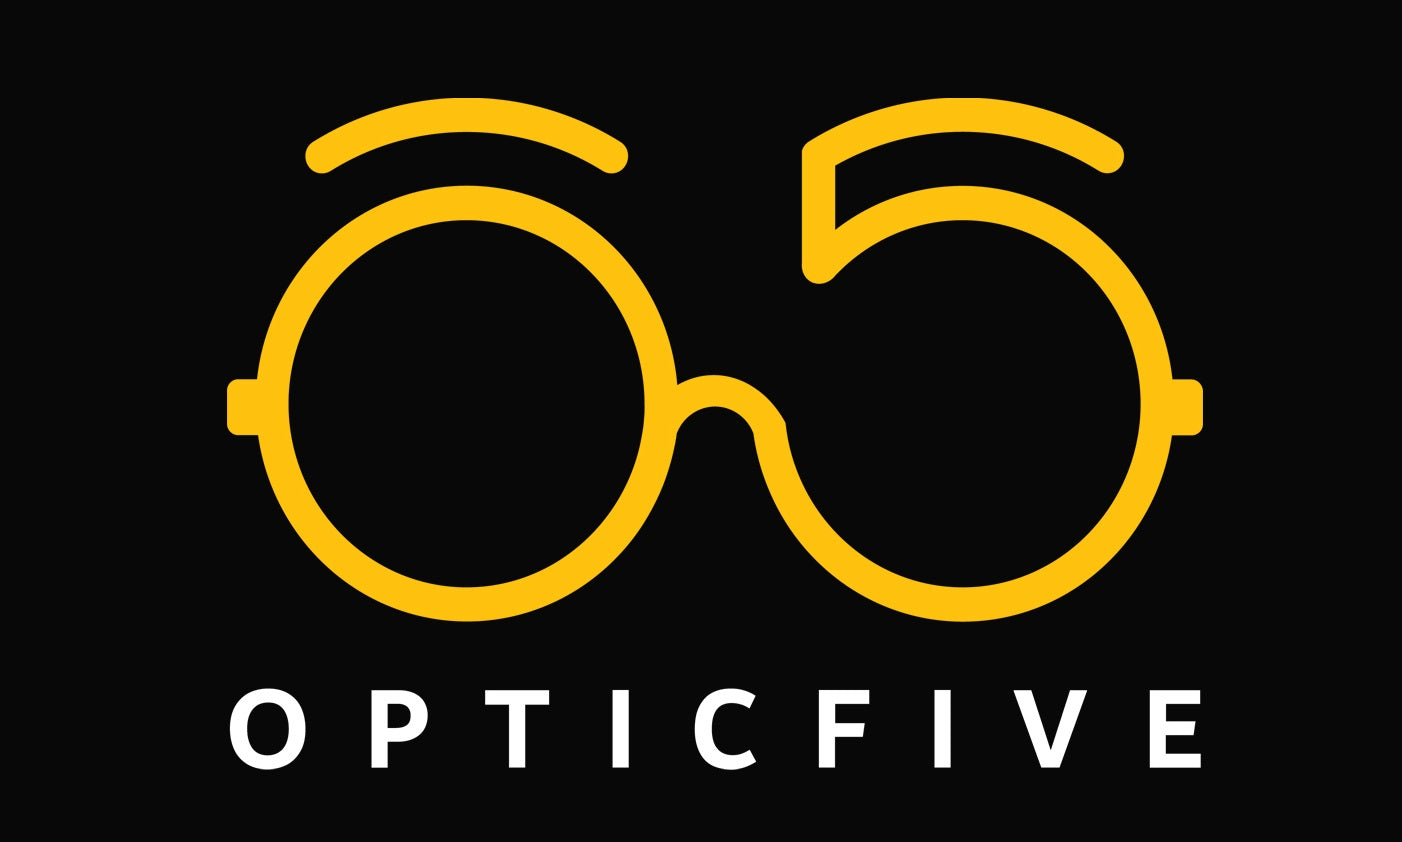 Opticfive